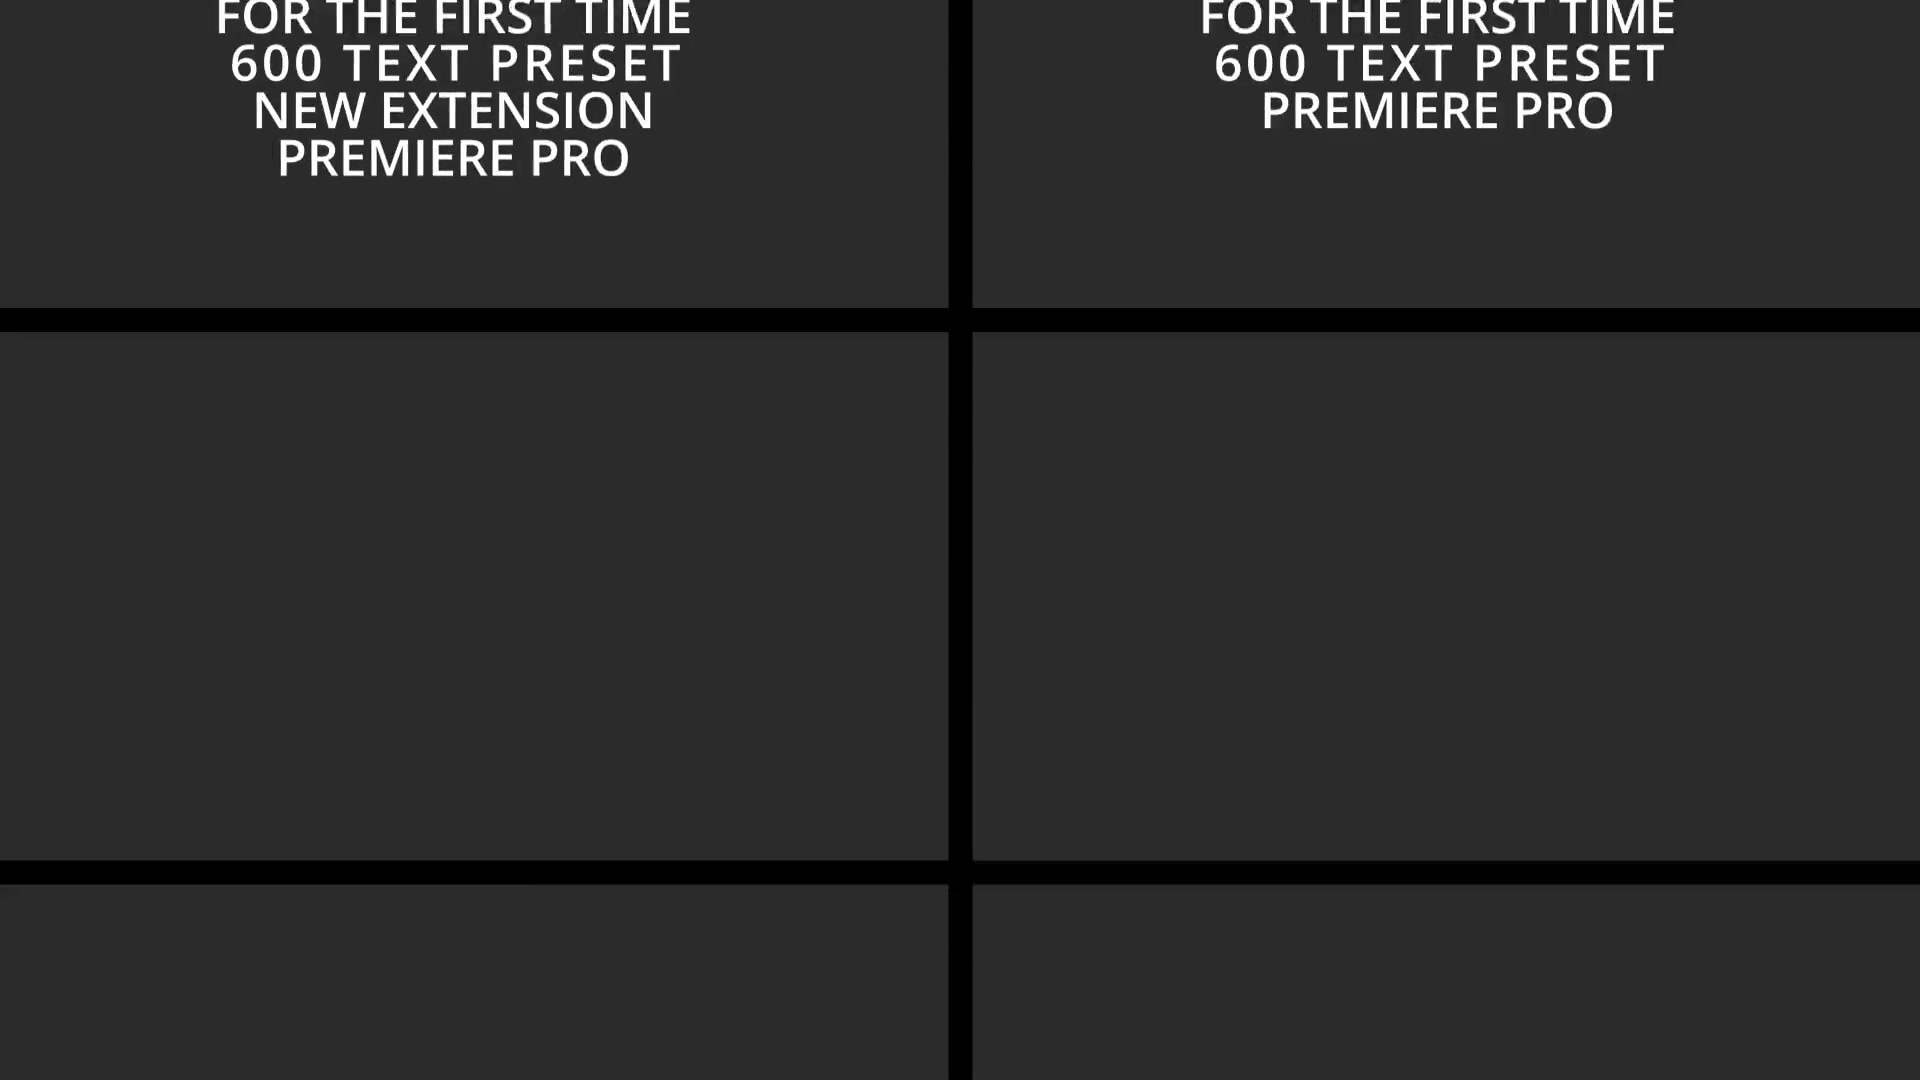 premiere pro text effects presets